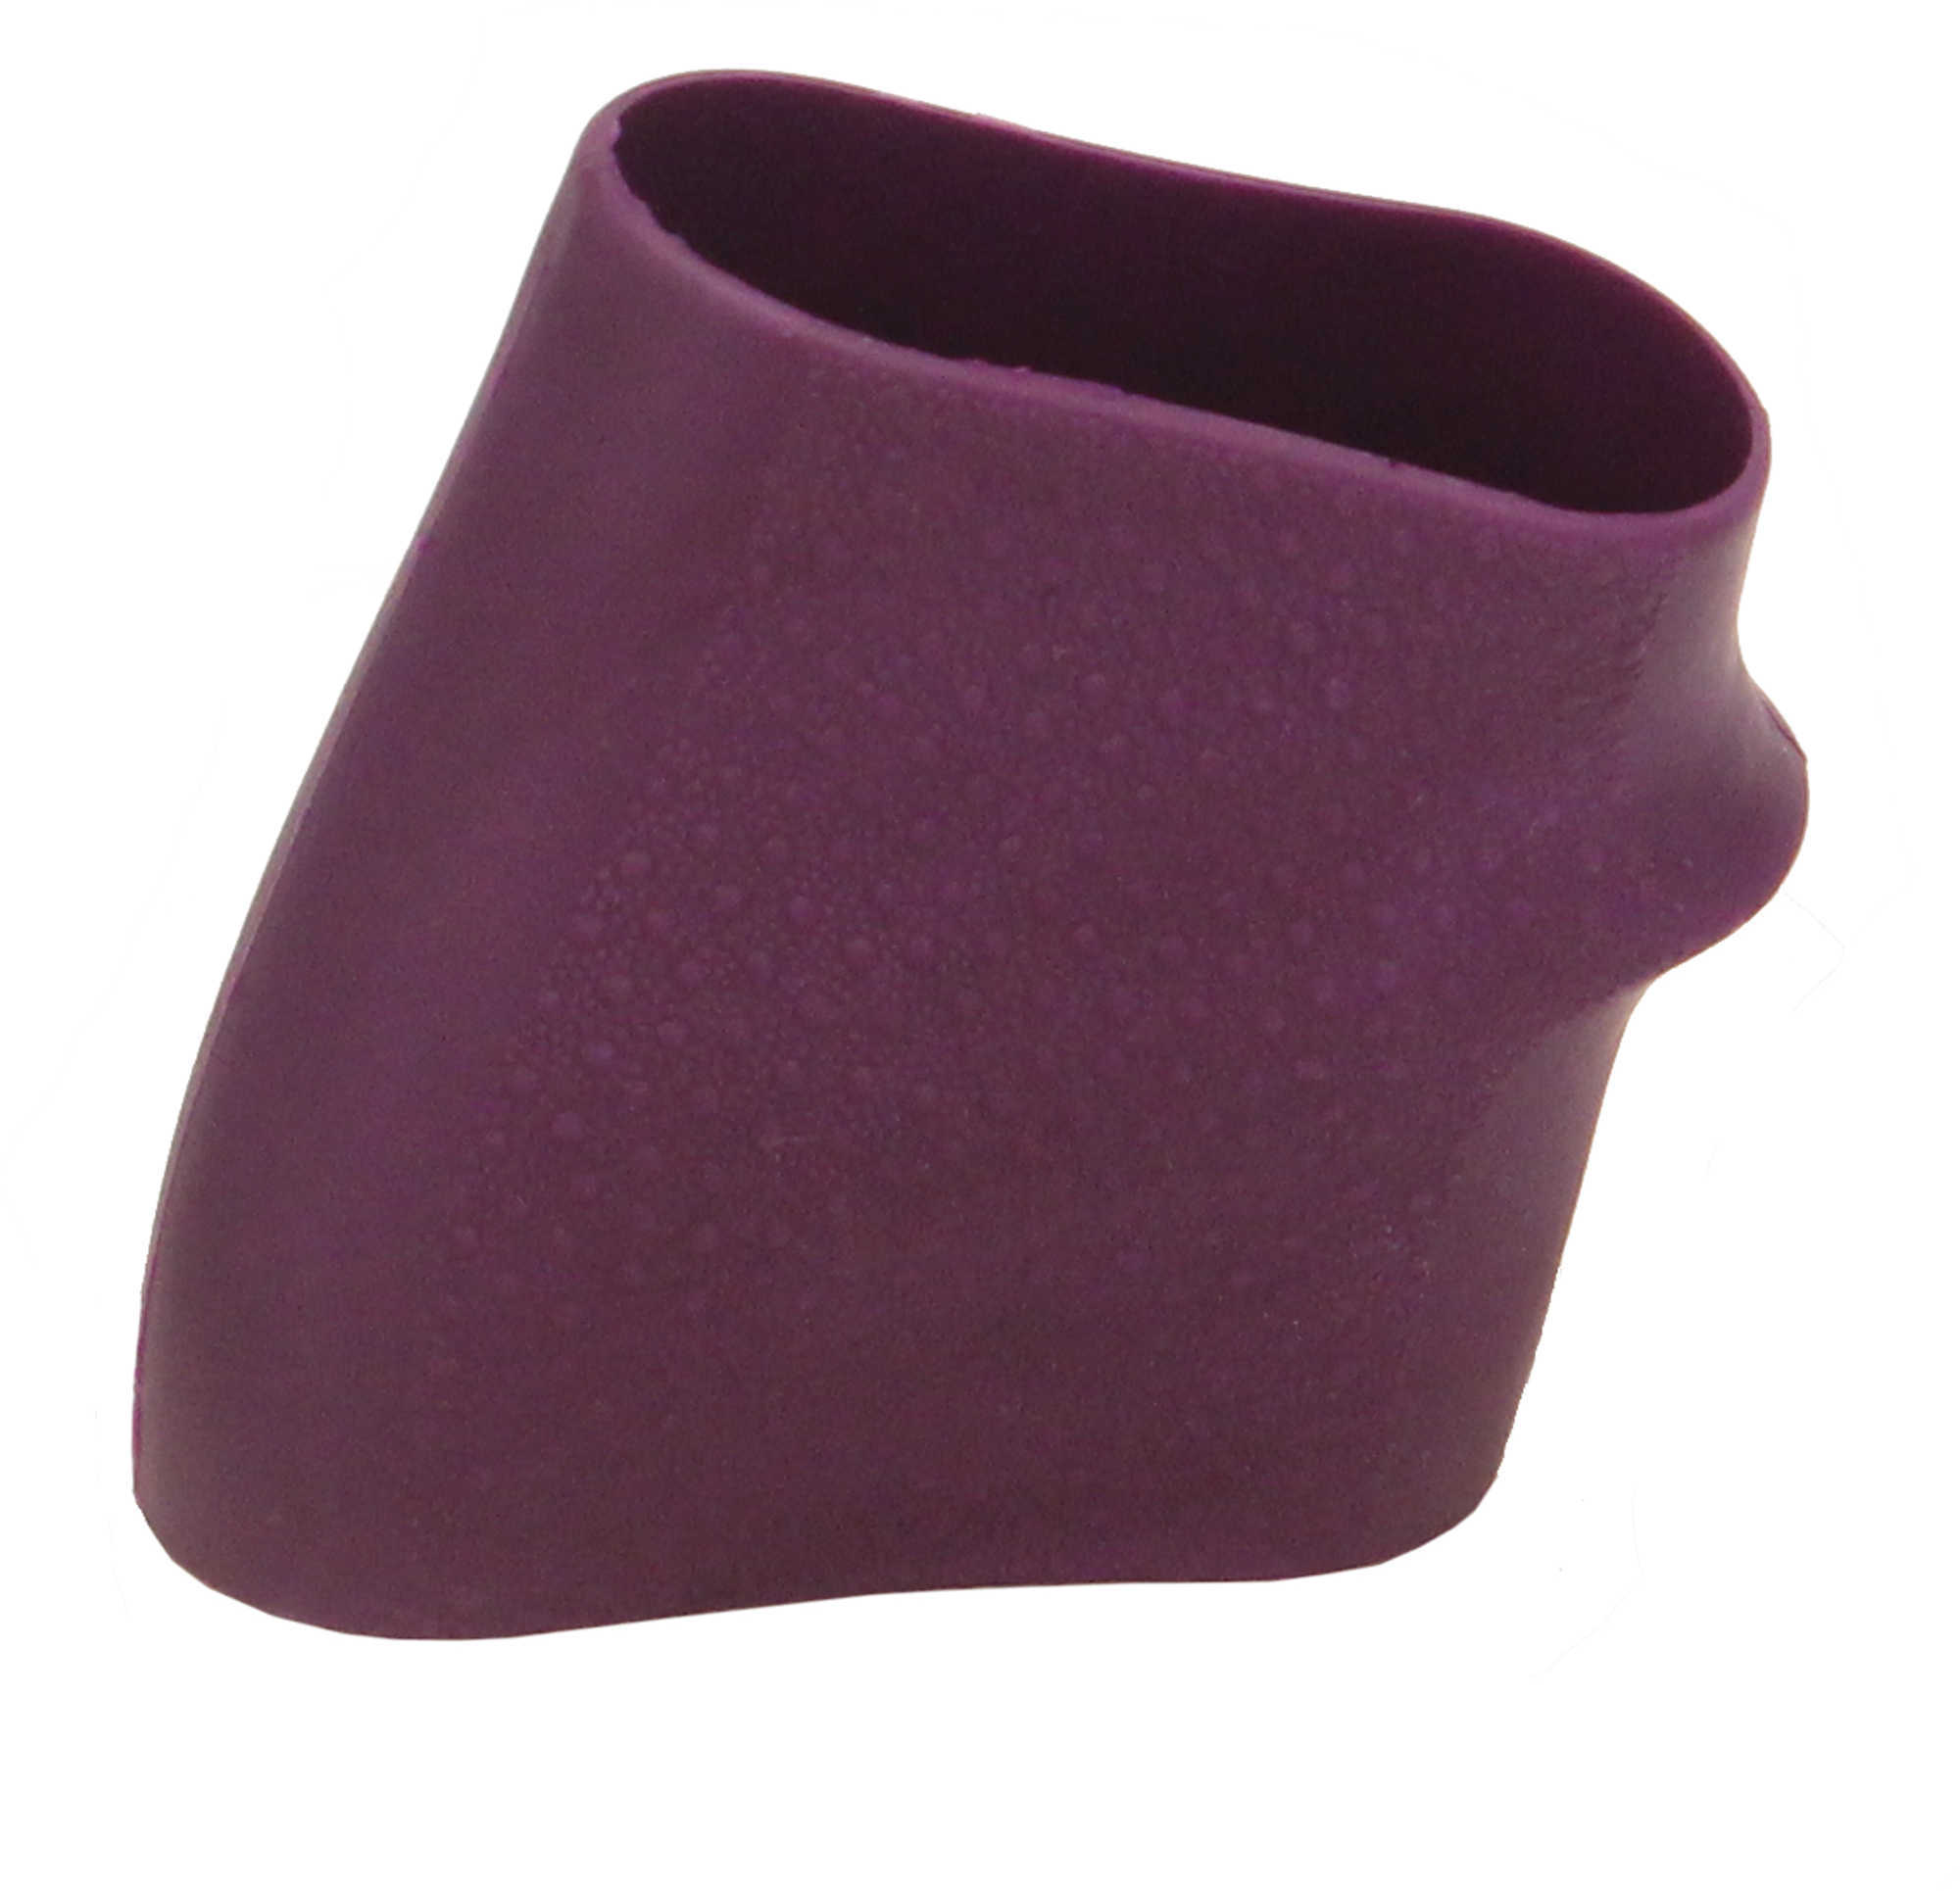 Handall Jr. Small Size Grip Sleeve Purple